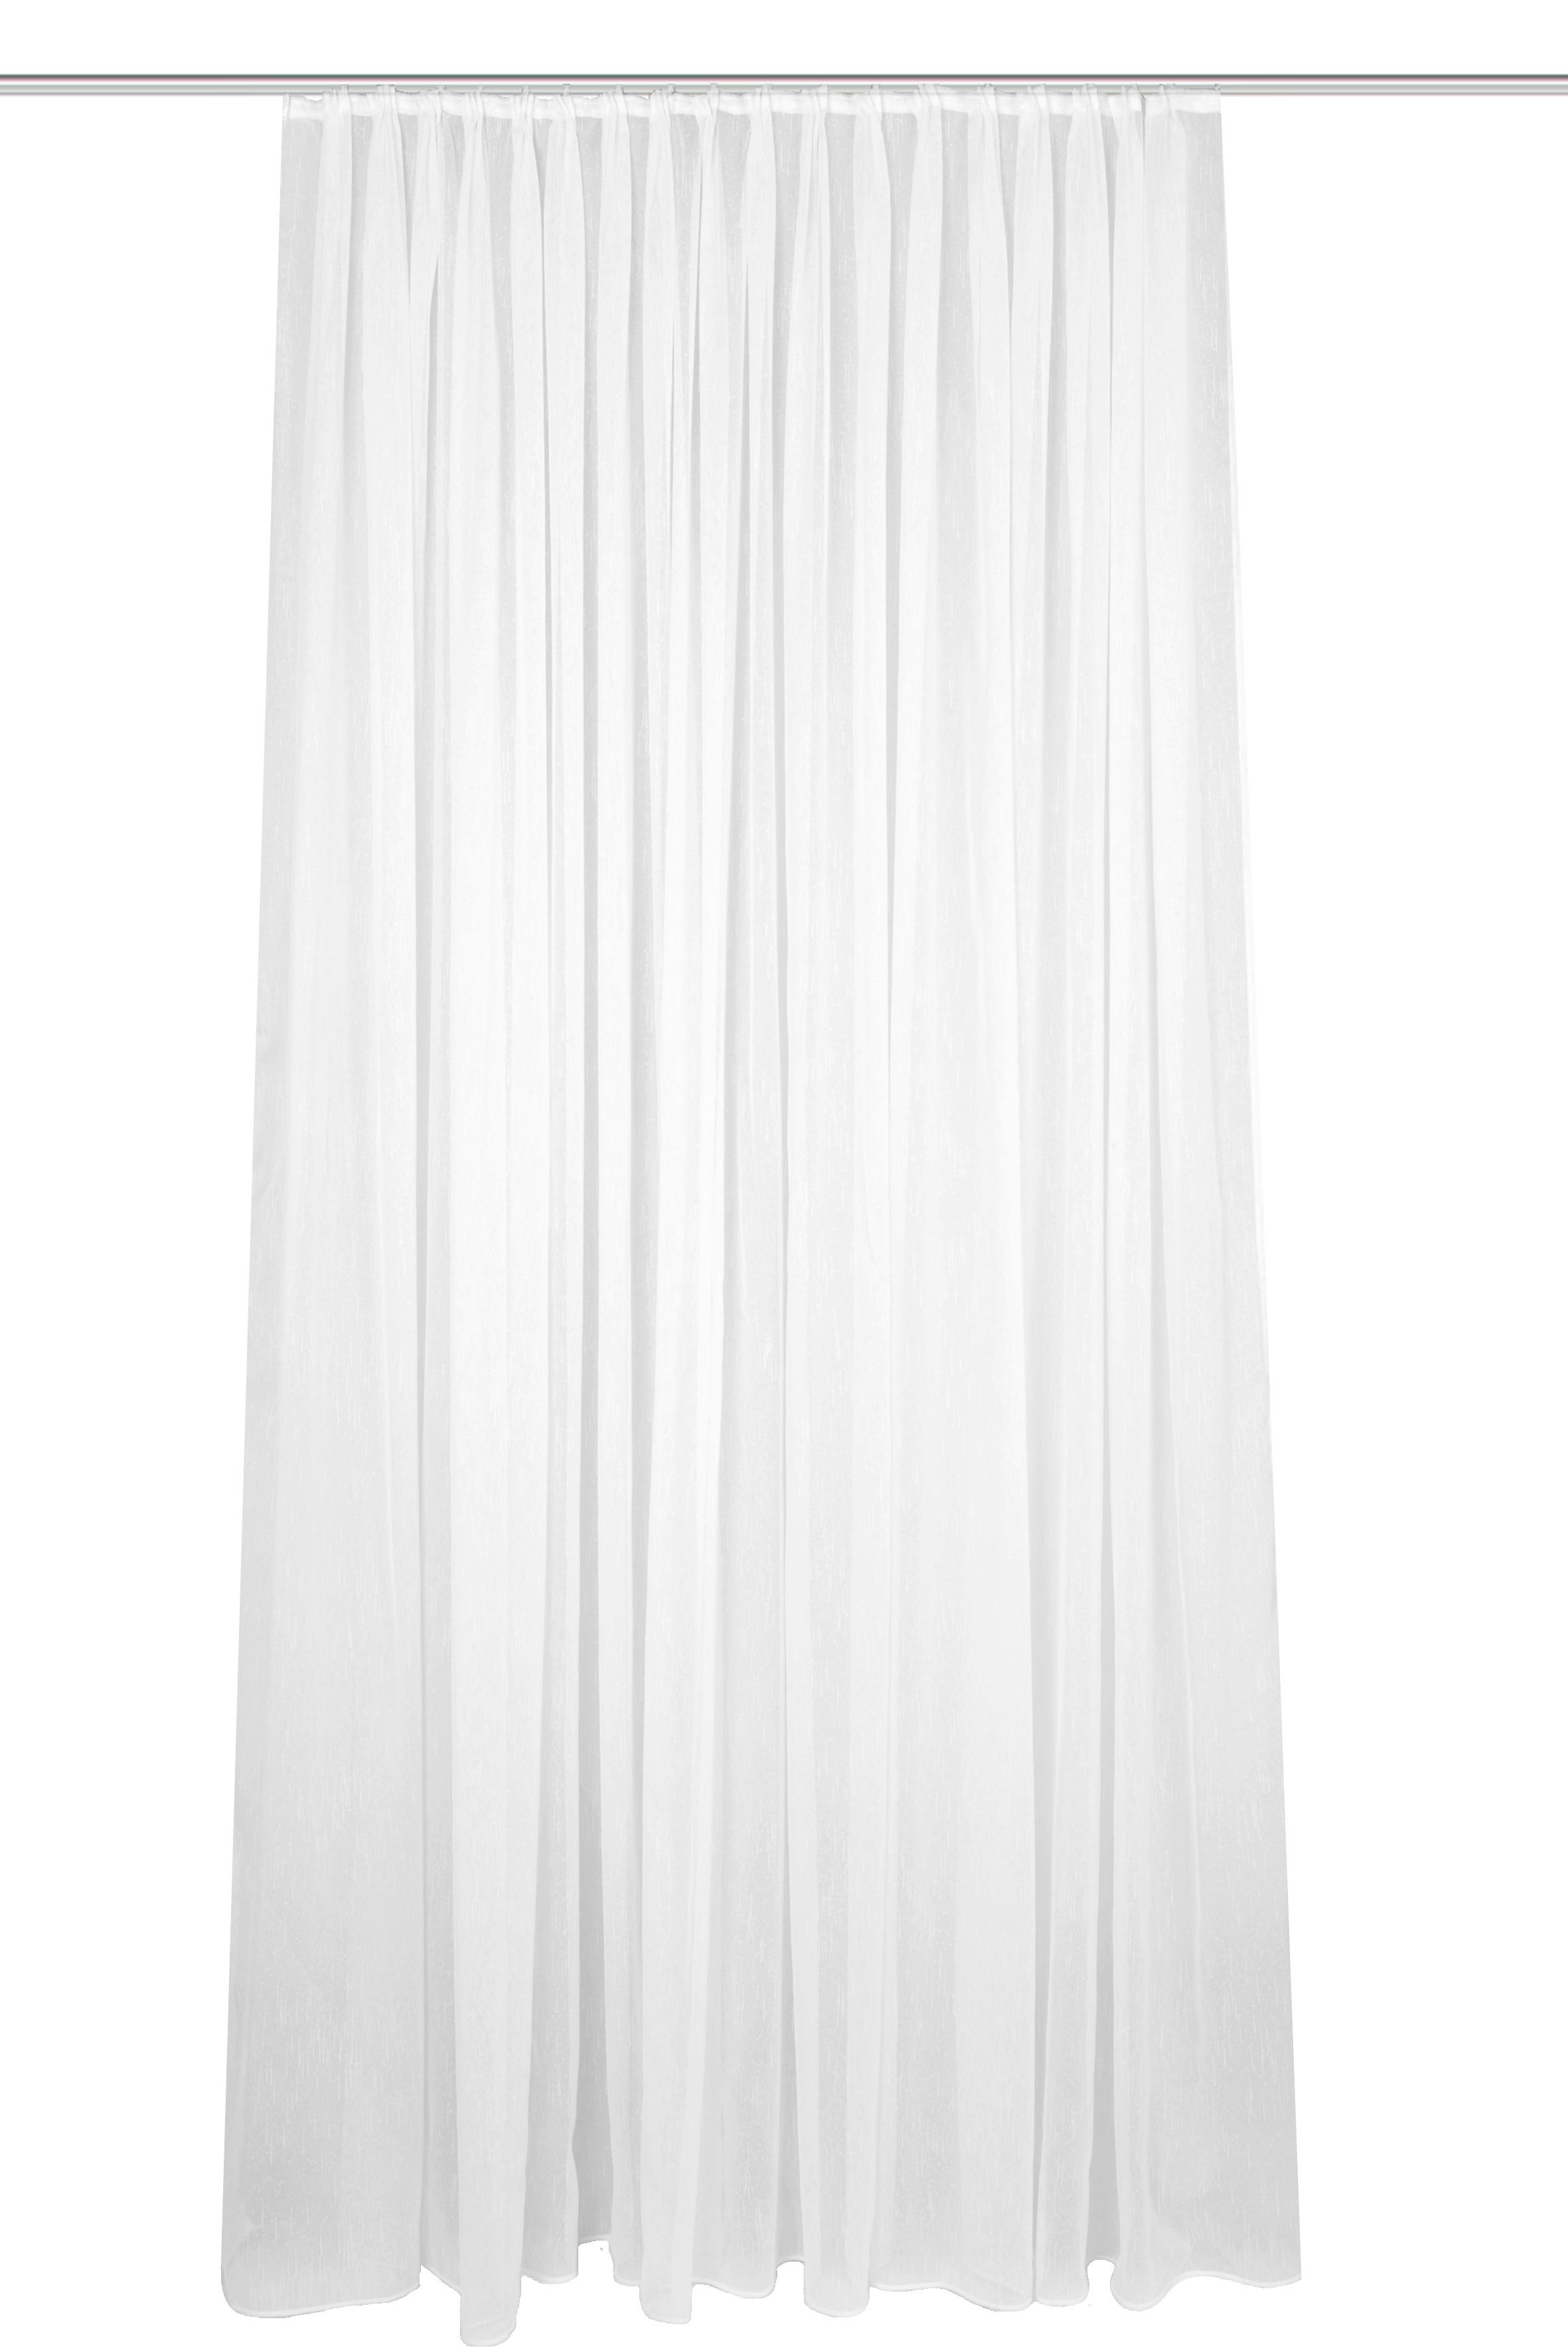 FERTIGSTORE  transparent  600/145 cm   - Weiß, Basics, Textil (600/145cm)